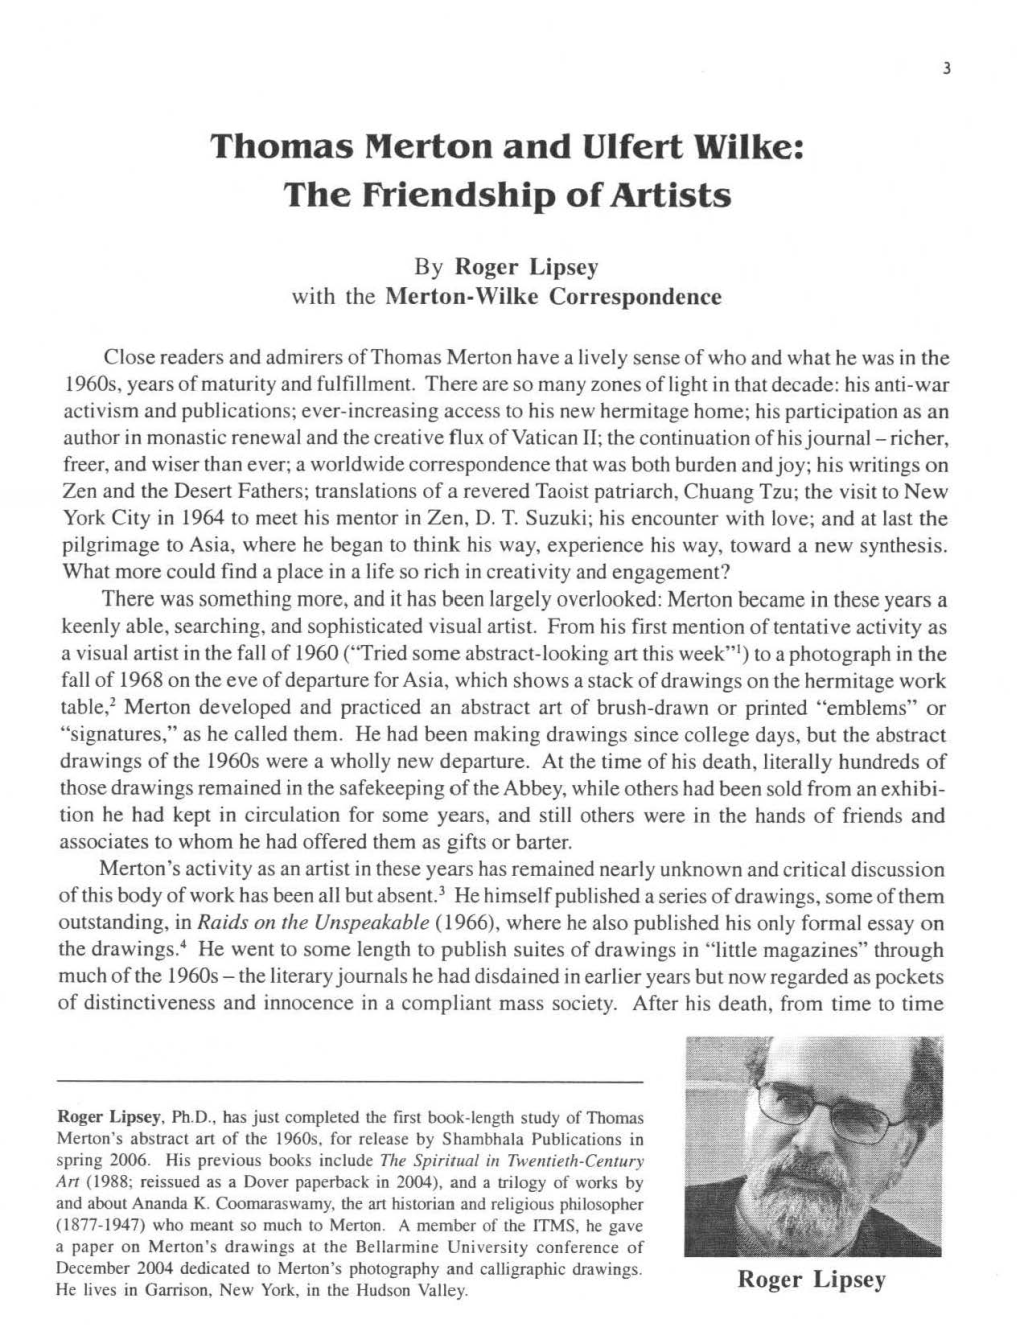 Thomas Merton and Ulfert Wilke: the Friendship of Artists